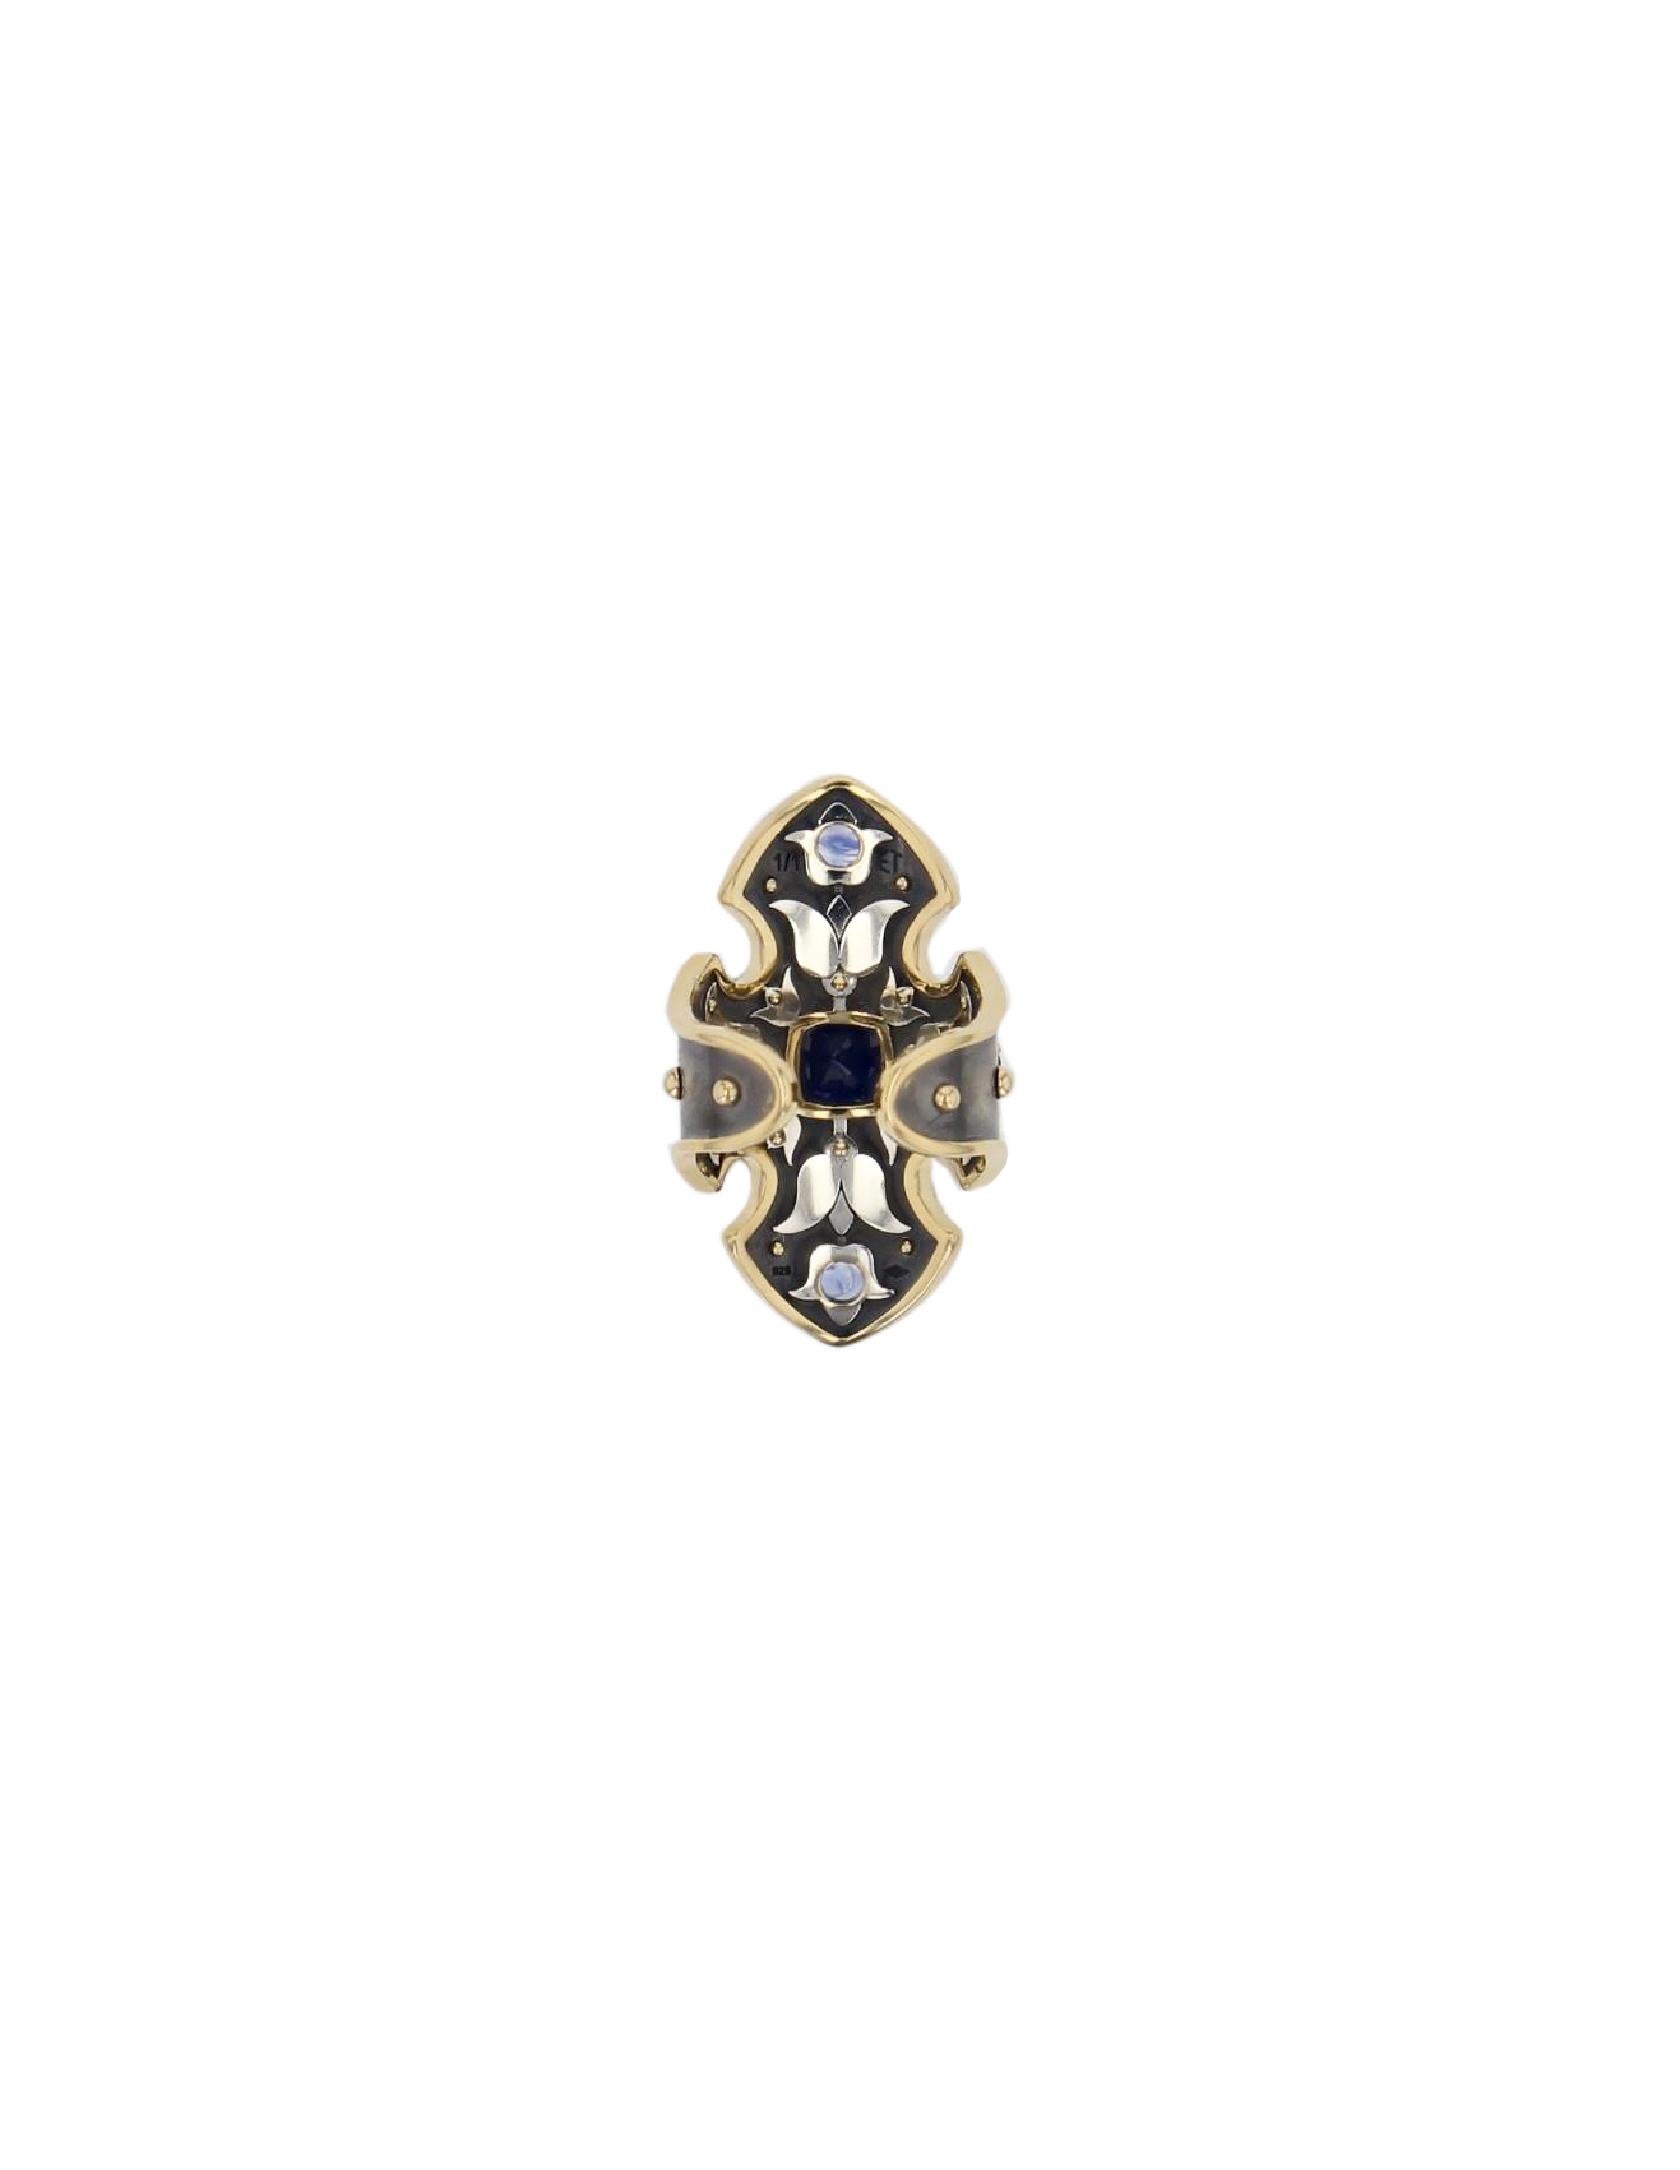 Neoclassical La Dame du Lac 18 Karat Gold Blue Sapphire and Diamond Shield Ring by Elie Top